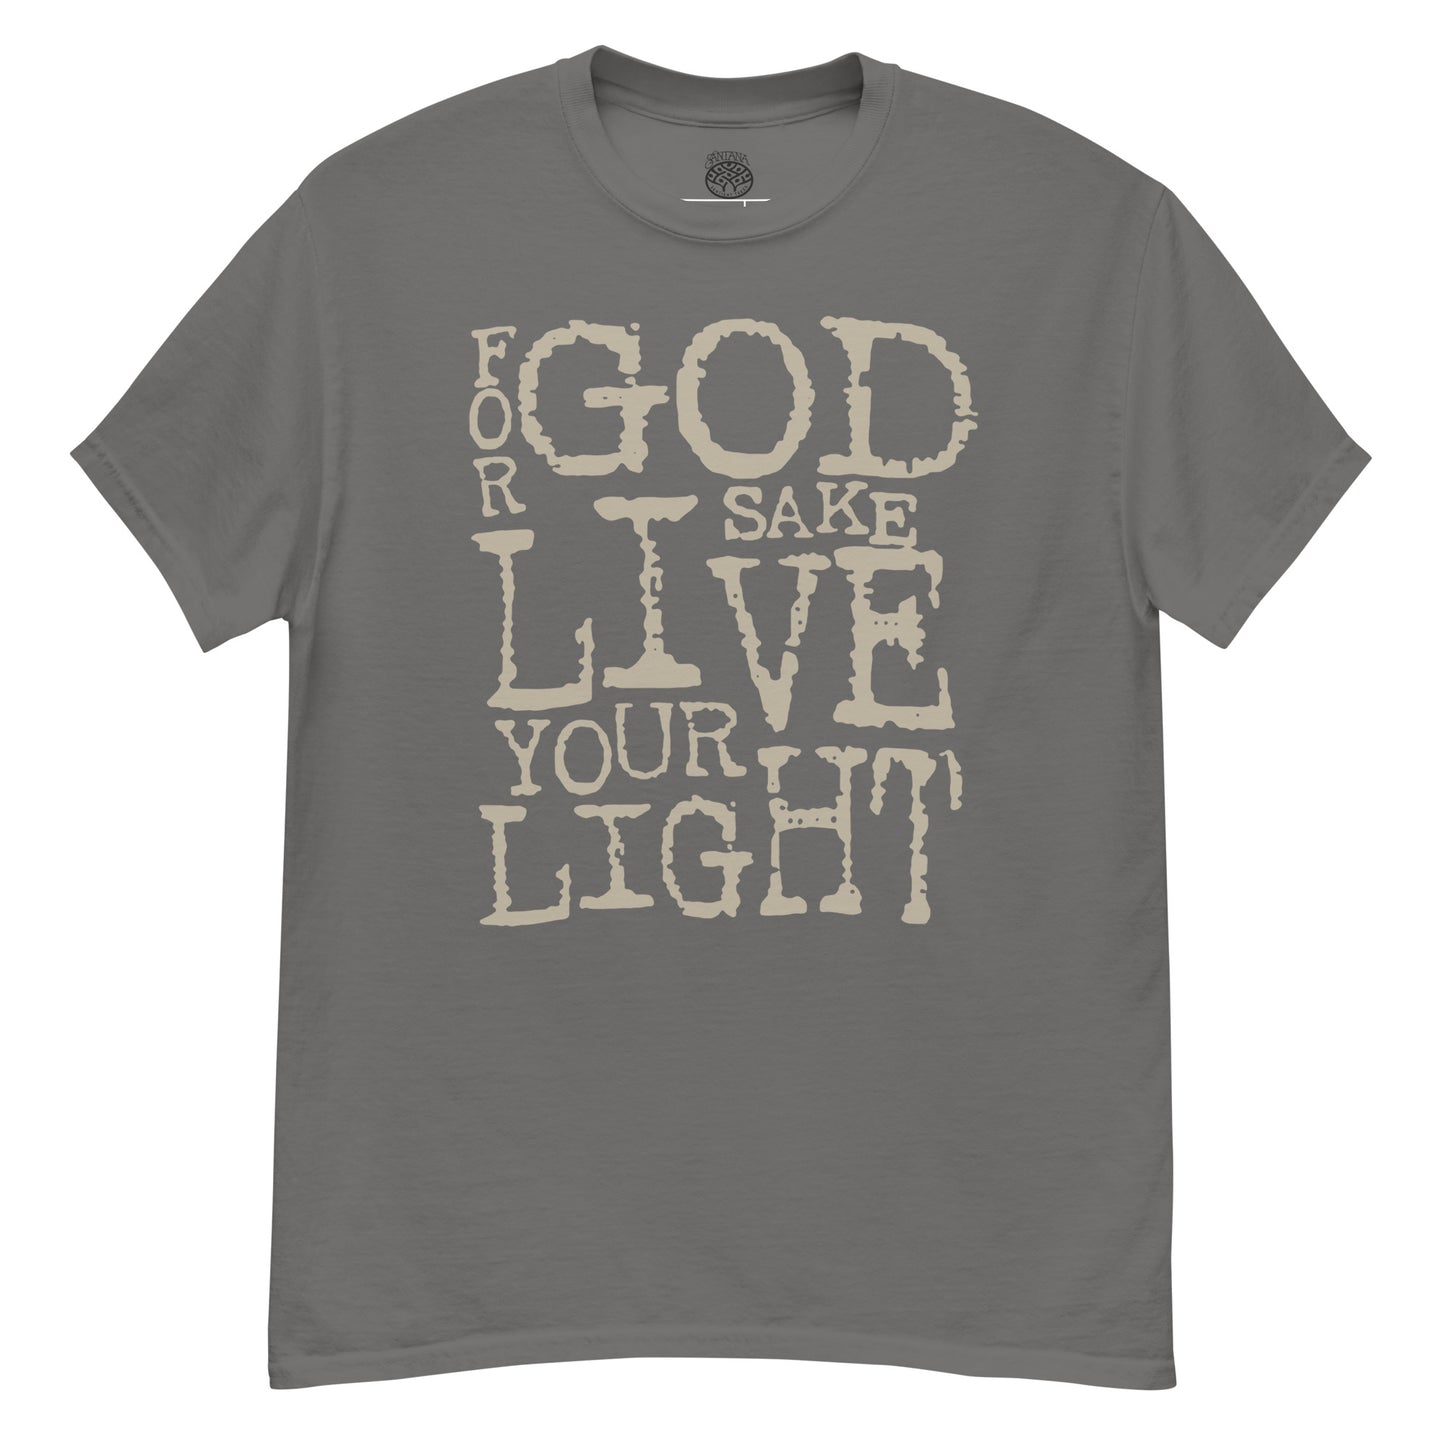 Santana - Live Your Light T-Shirt Charcoal